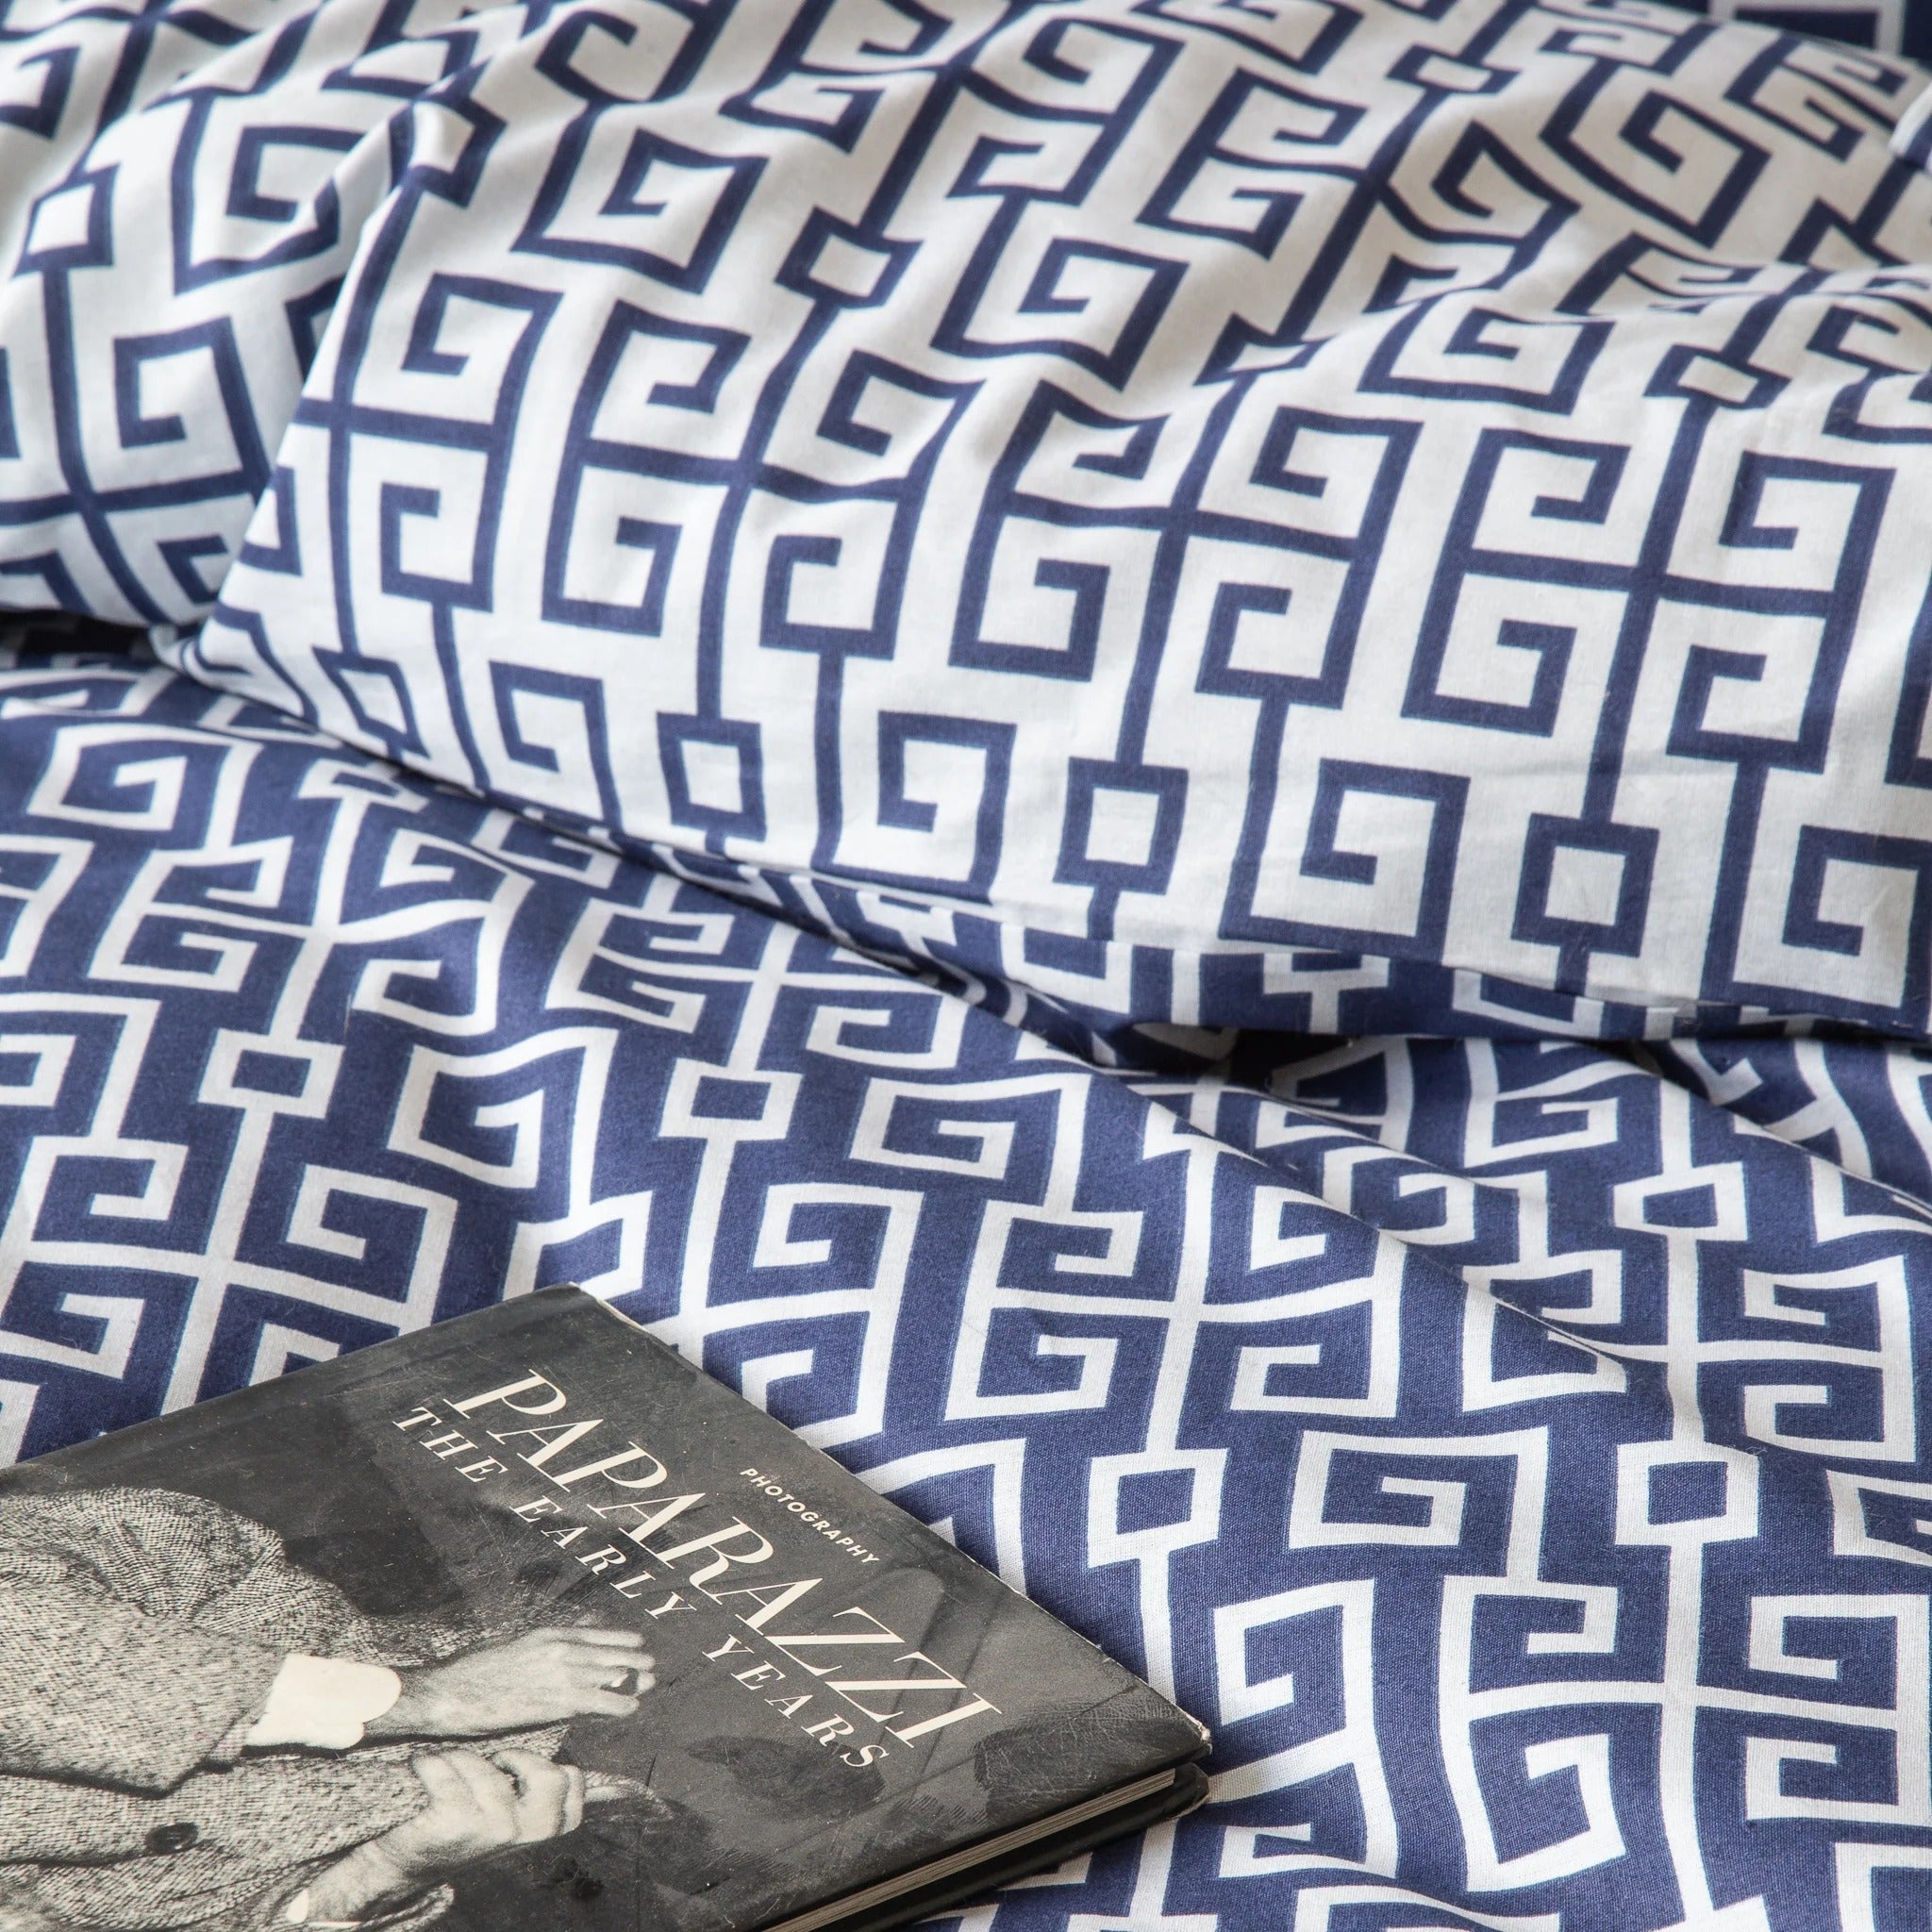 Classy Navy Blue Greek Key Cotton Duvet Cover Bedding Set